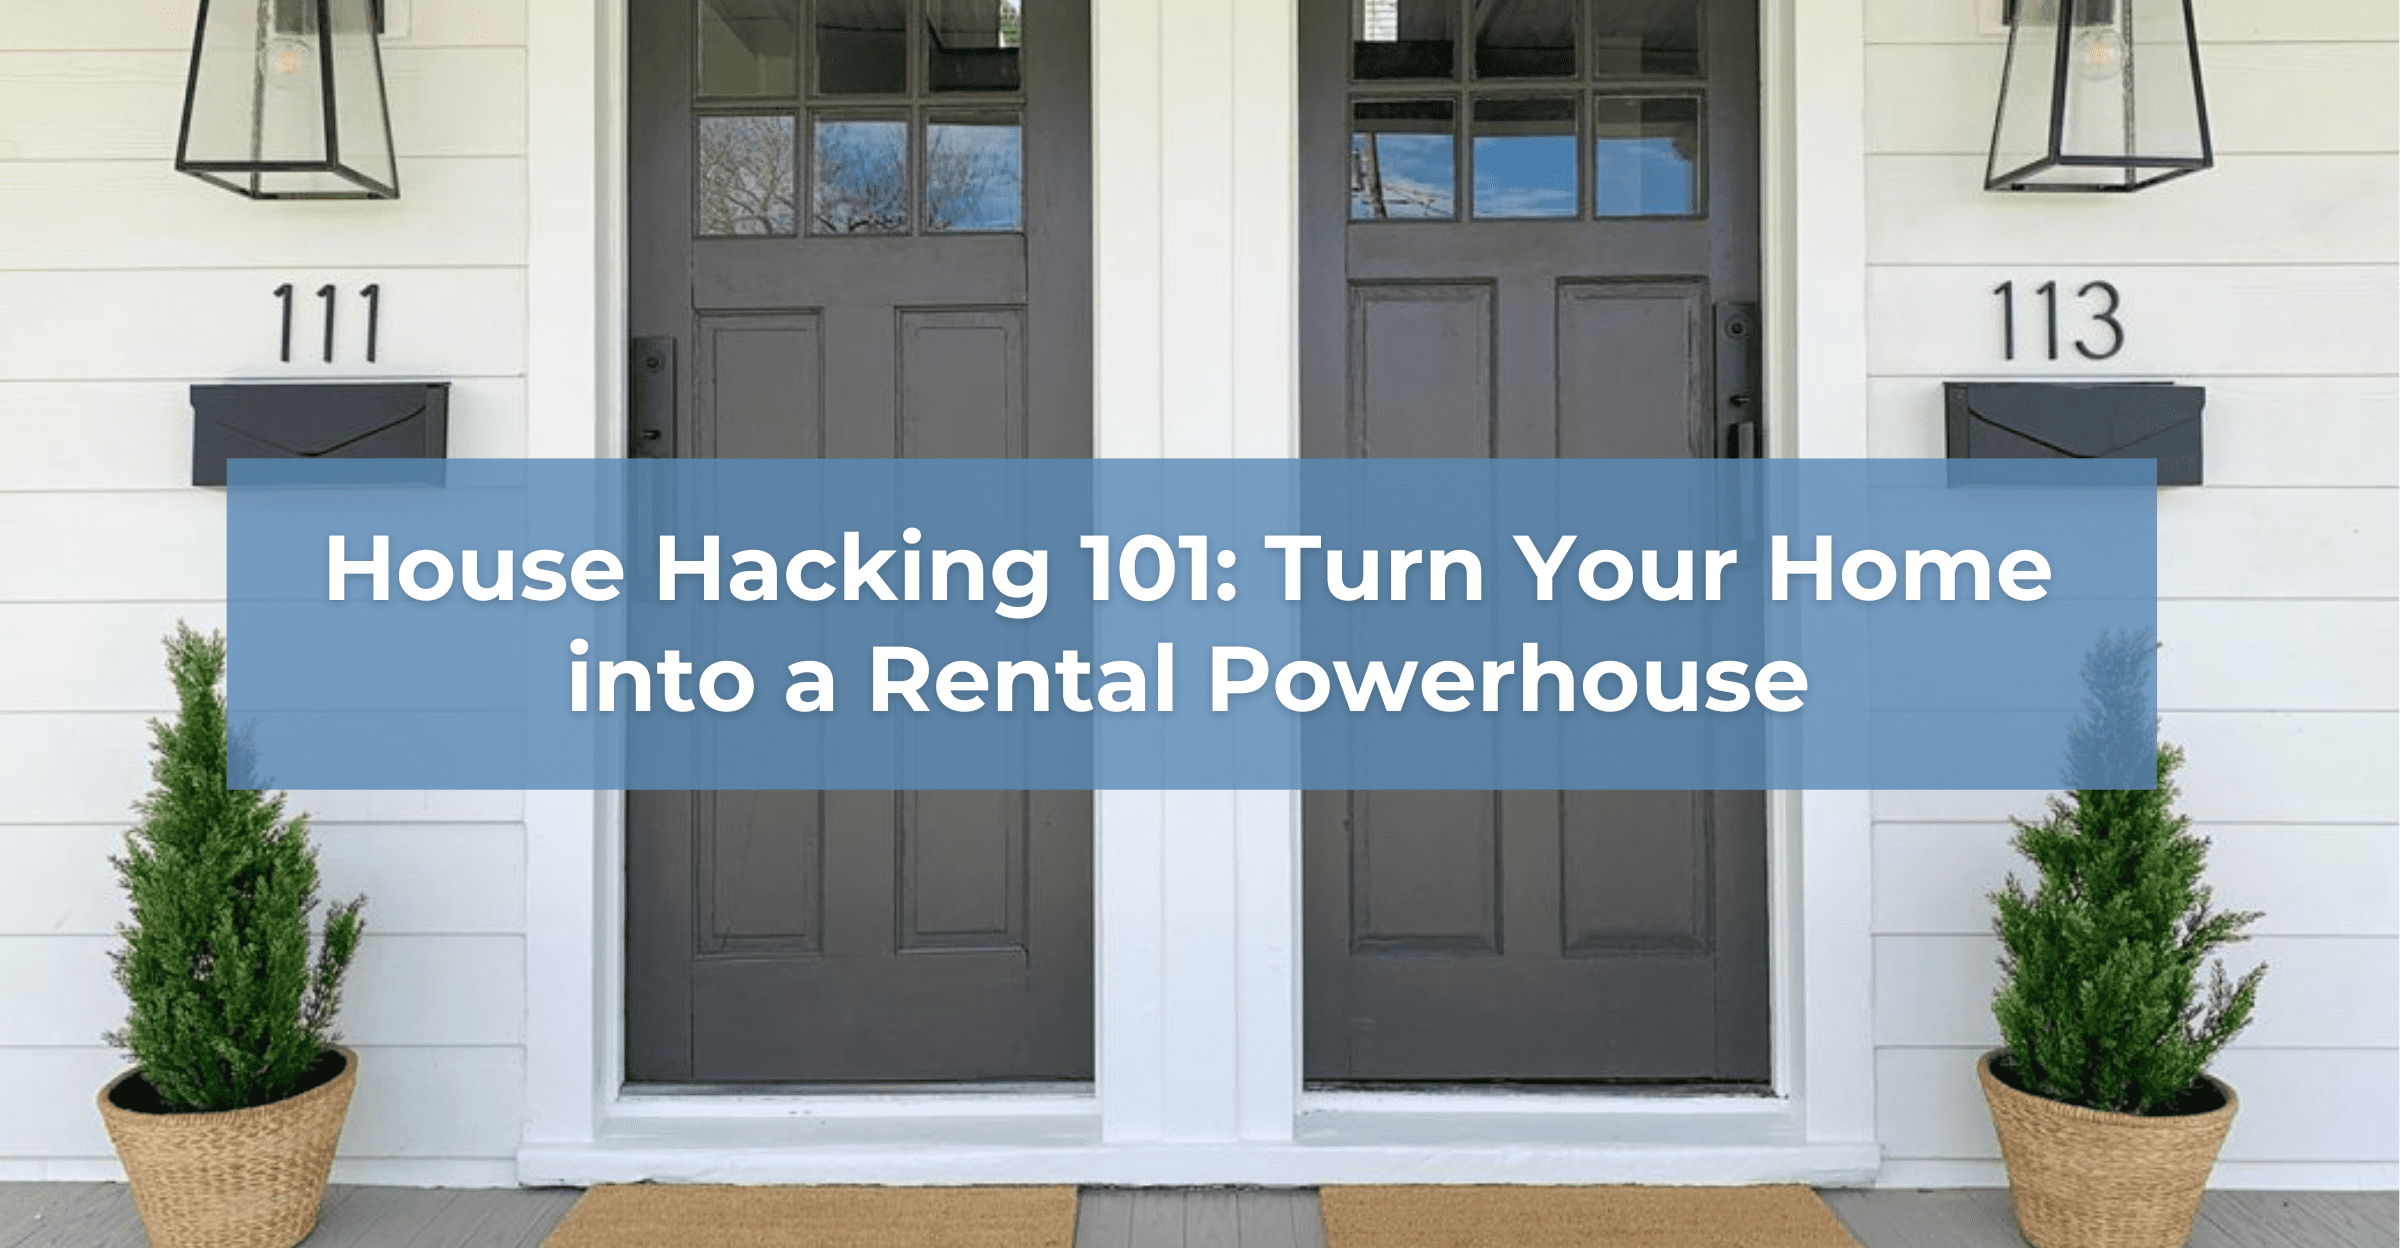 House Hacking 101: Turn Home into Rental Powerhouse